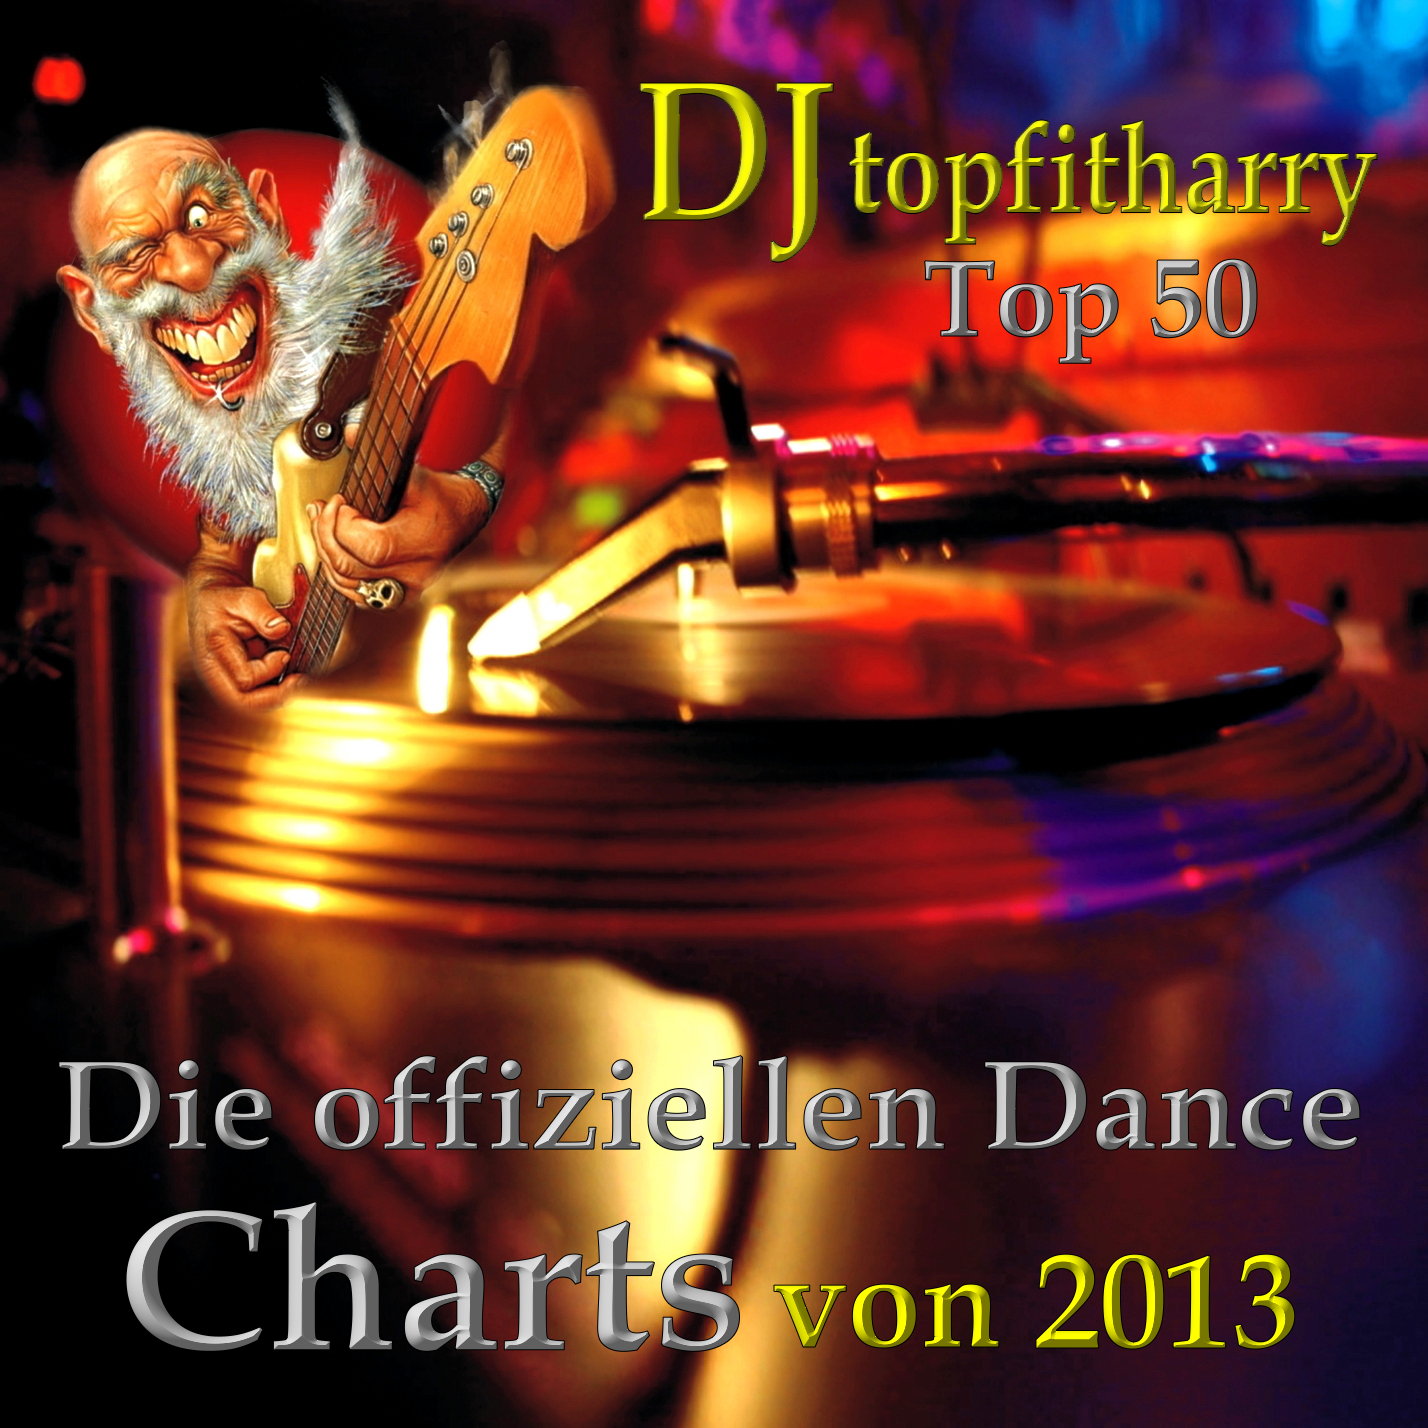 Die offiziellen Dance Charts 2013